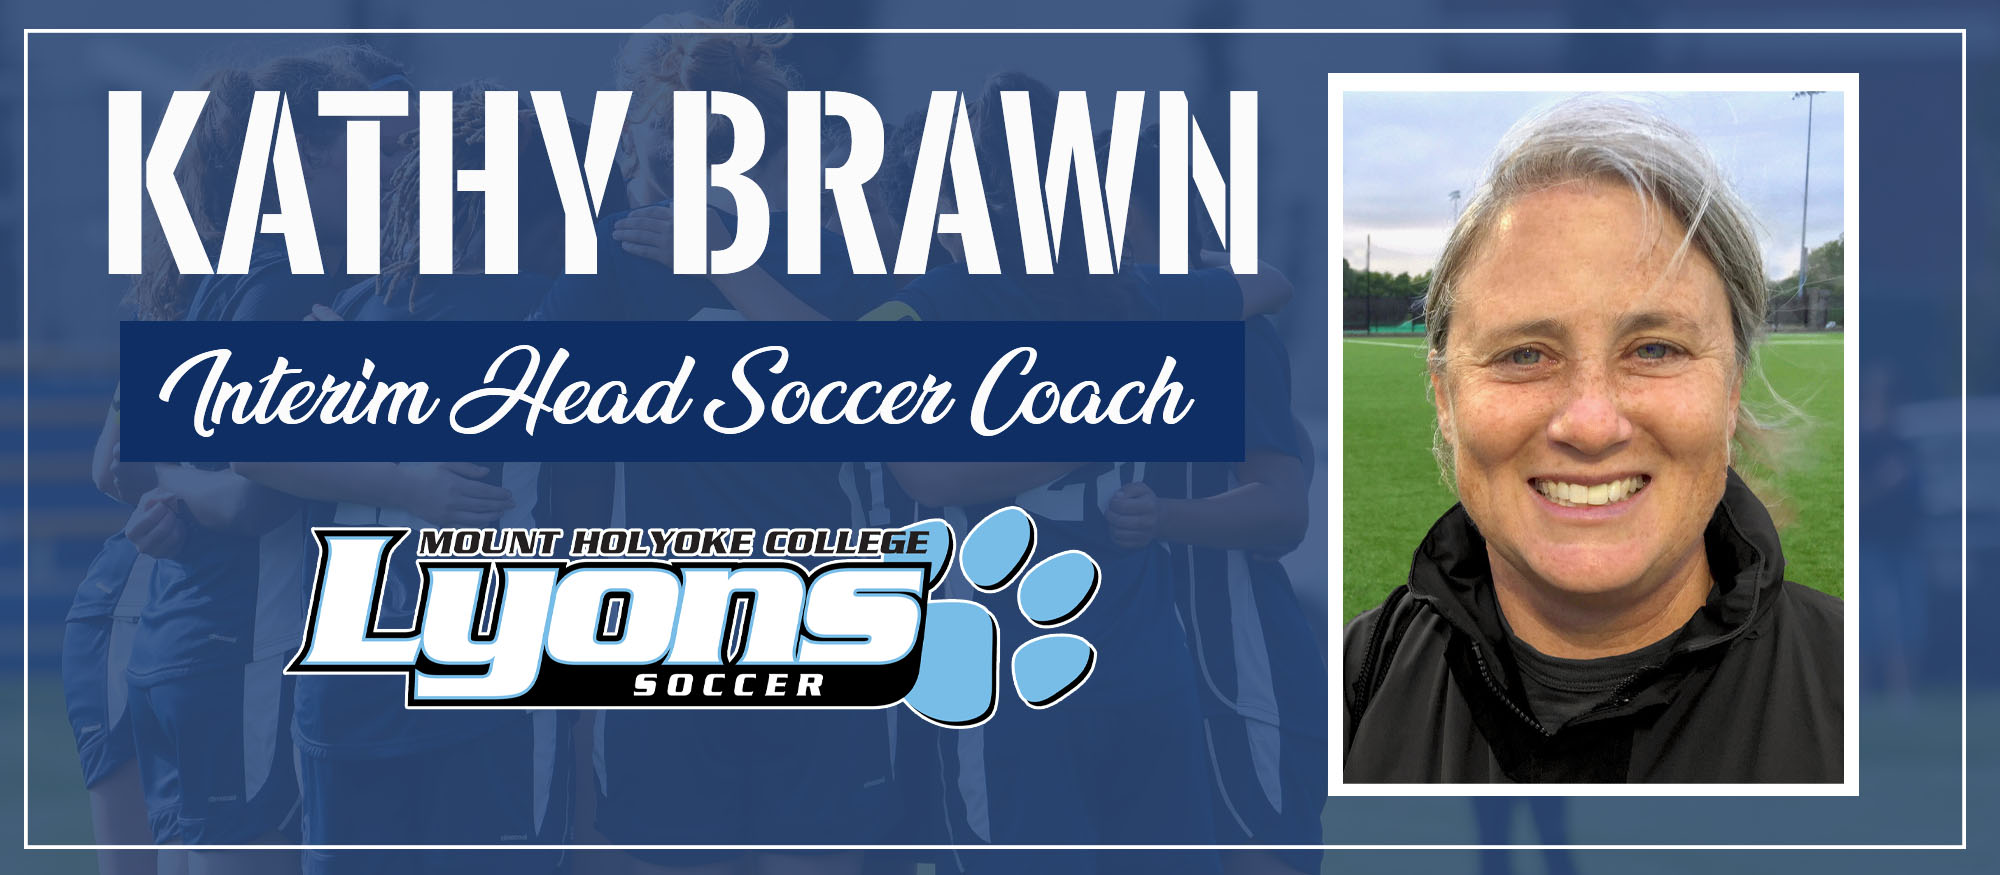 Kathy Brawn Named Interim Head Soccer Coach at Mount Holyoke College